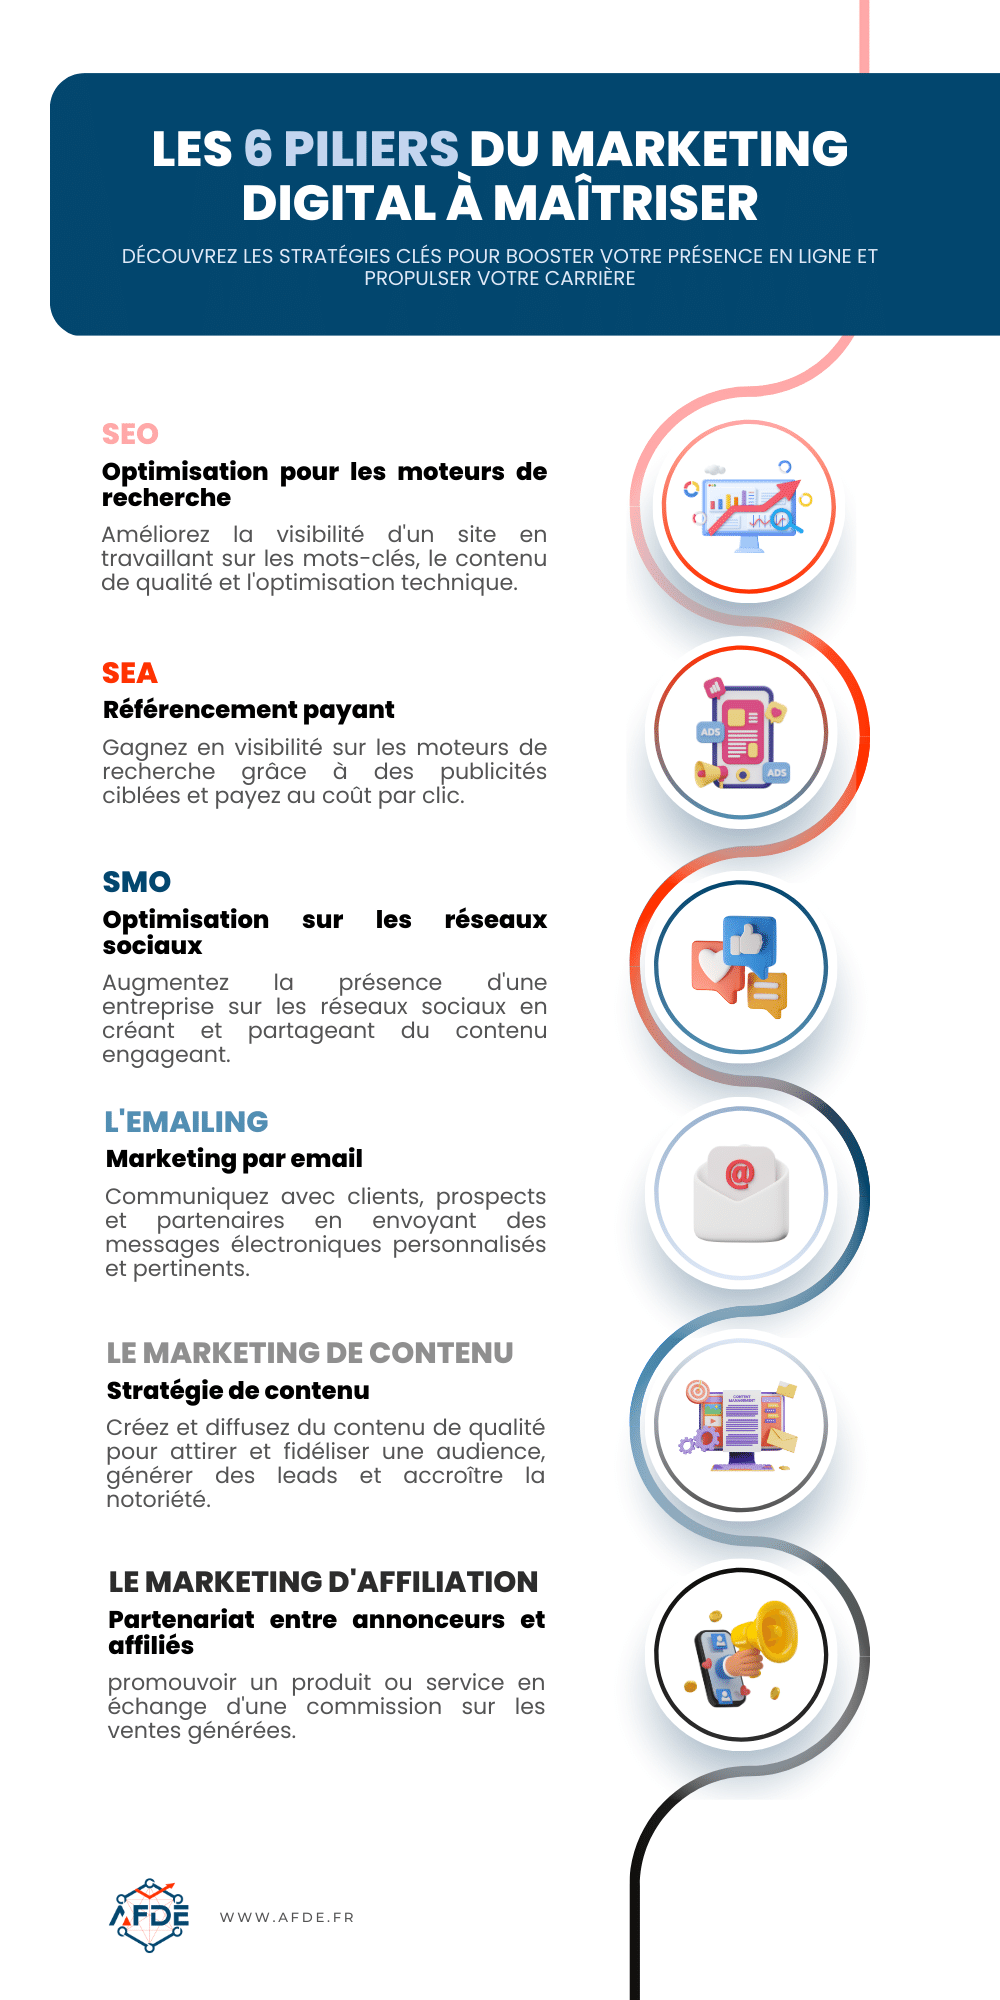 Infographie des 6 piliers du marketing digital : SEO, SEA, SMO, emailing, contenu et affiliation